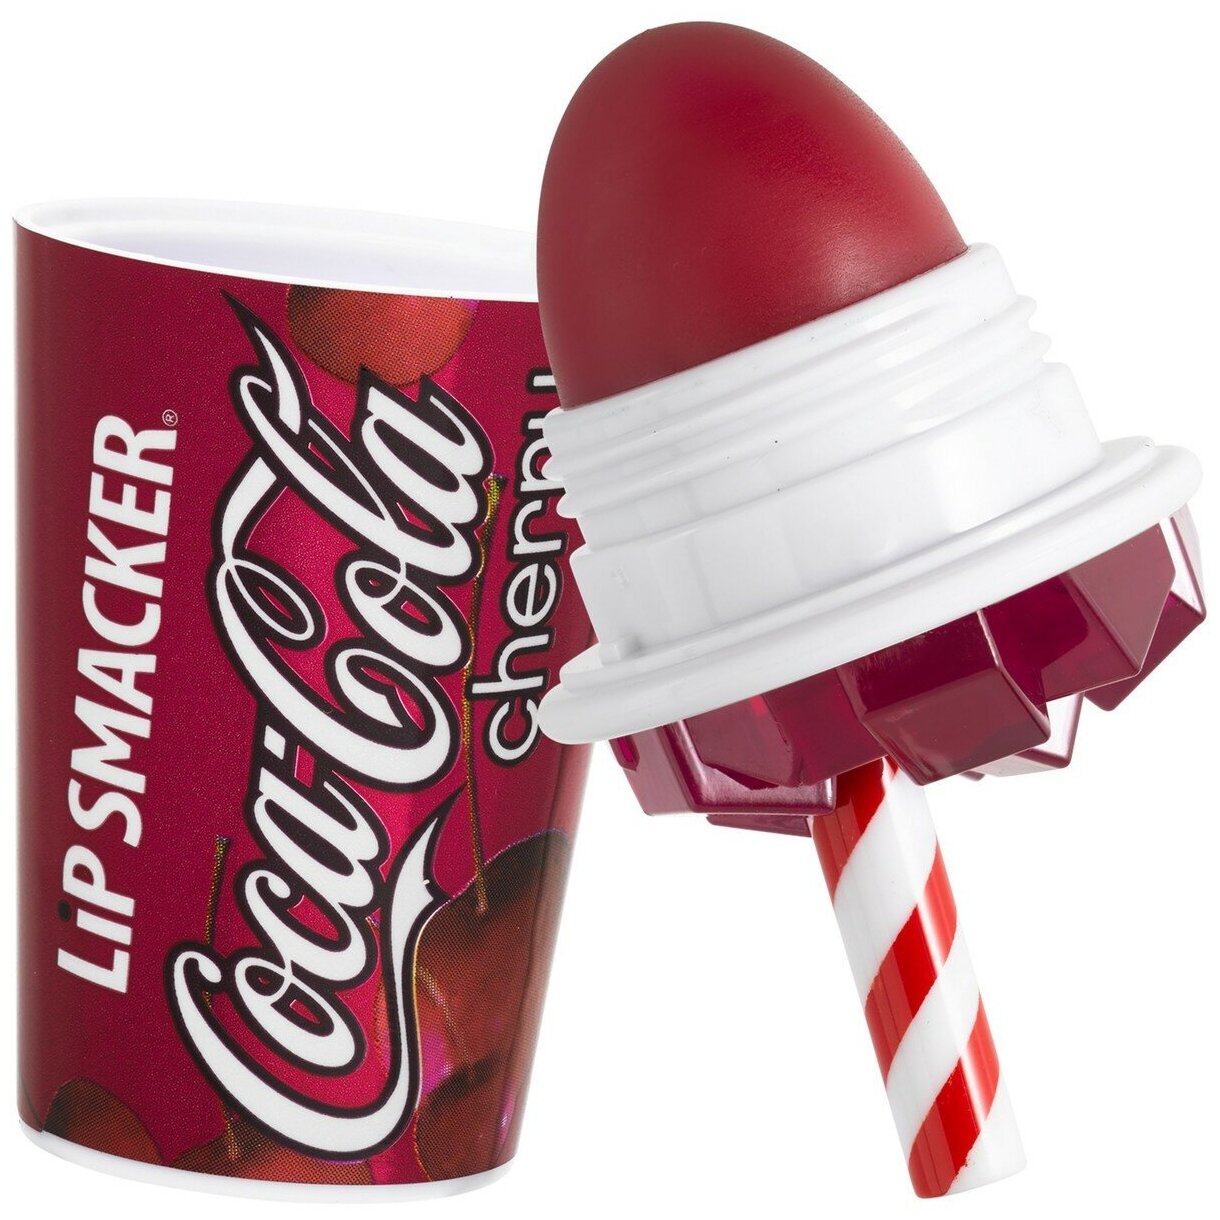 Бальзам для губ Lip smacker (Липсмайкер) с ароматом coca-cola cherry 7,4г Markwins Beauty Brands CN - фото №2